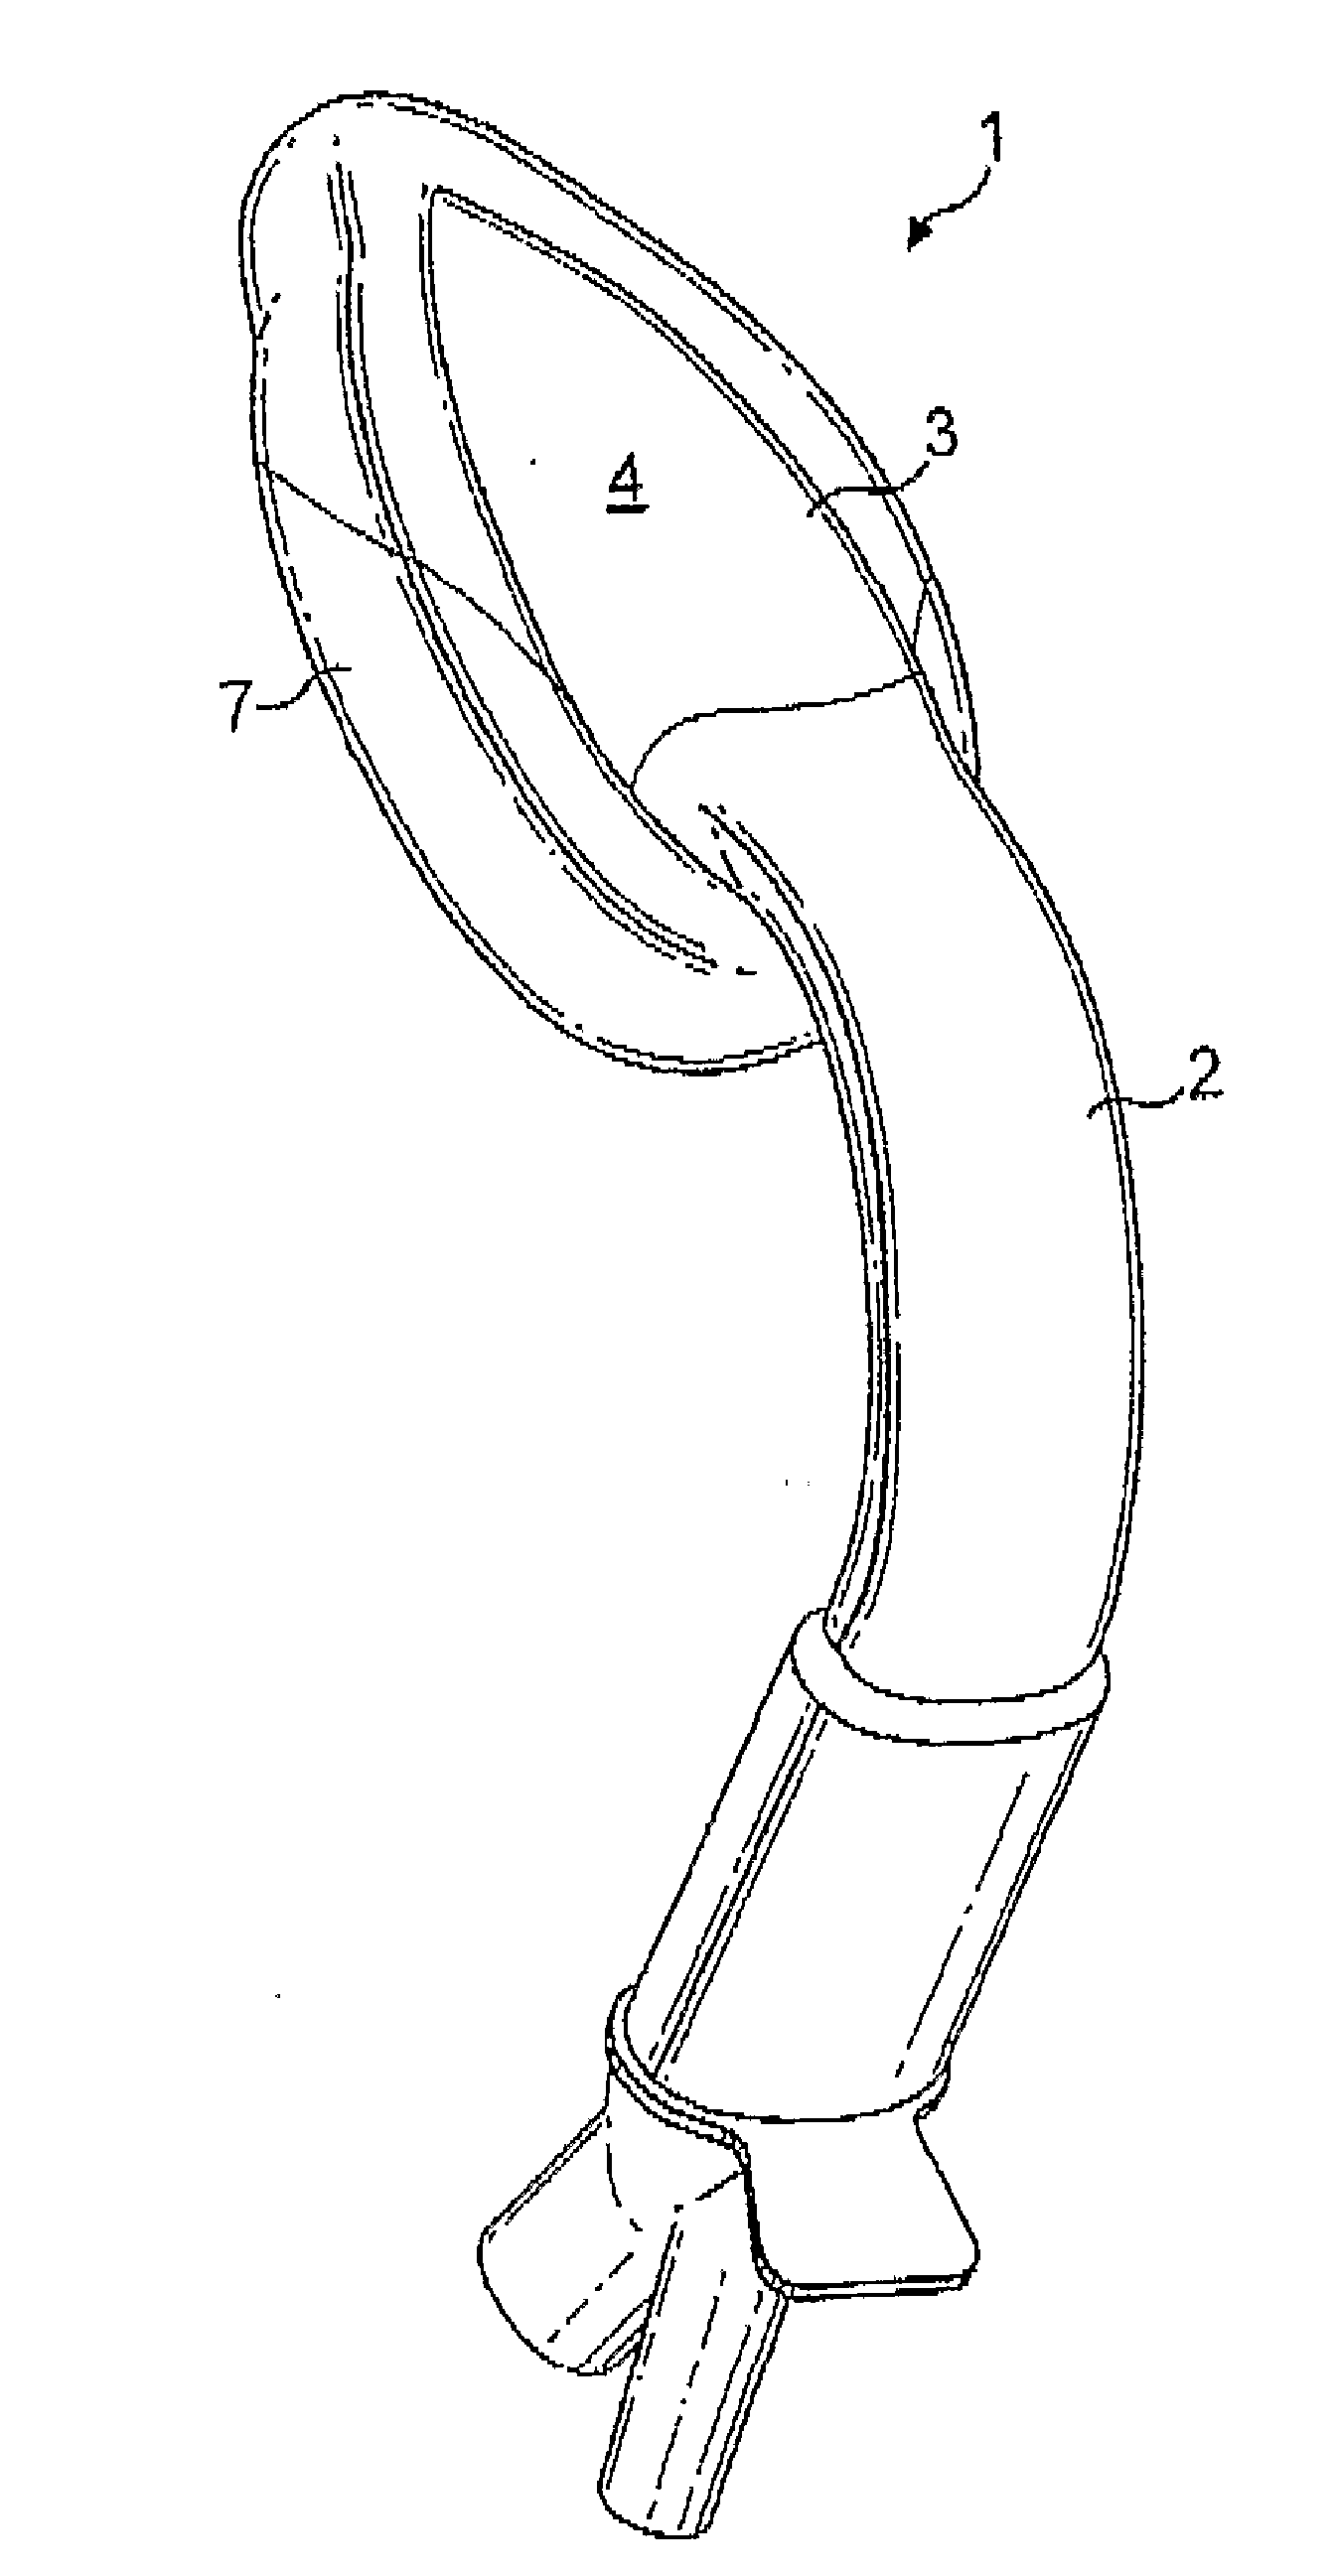 Laryngeal mask airway device